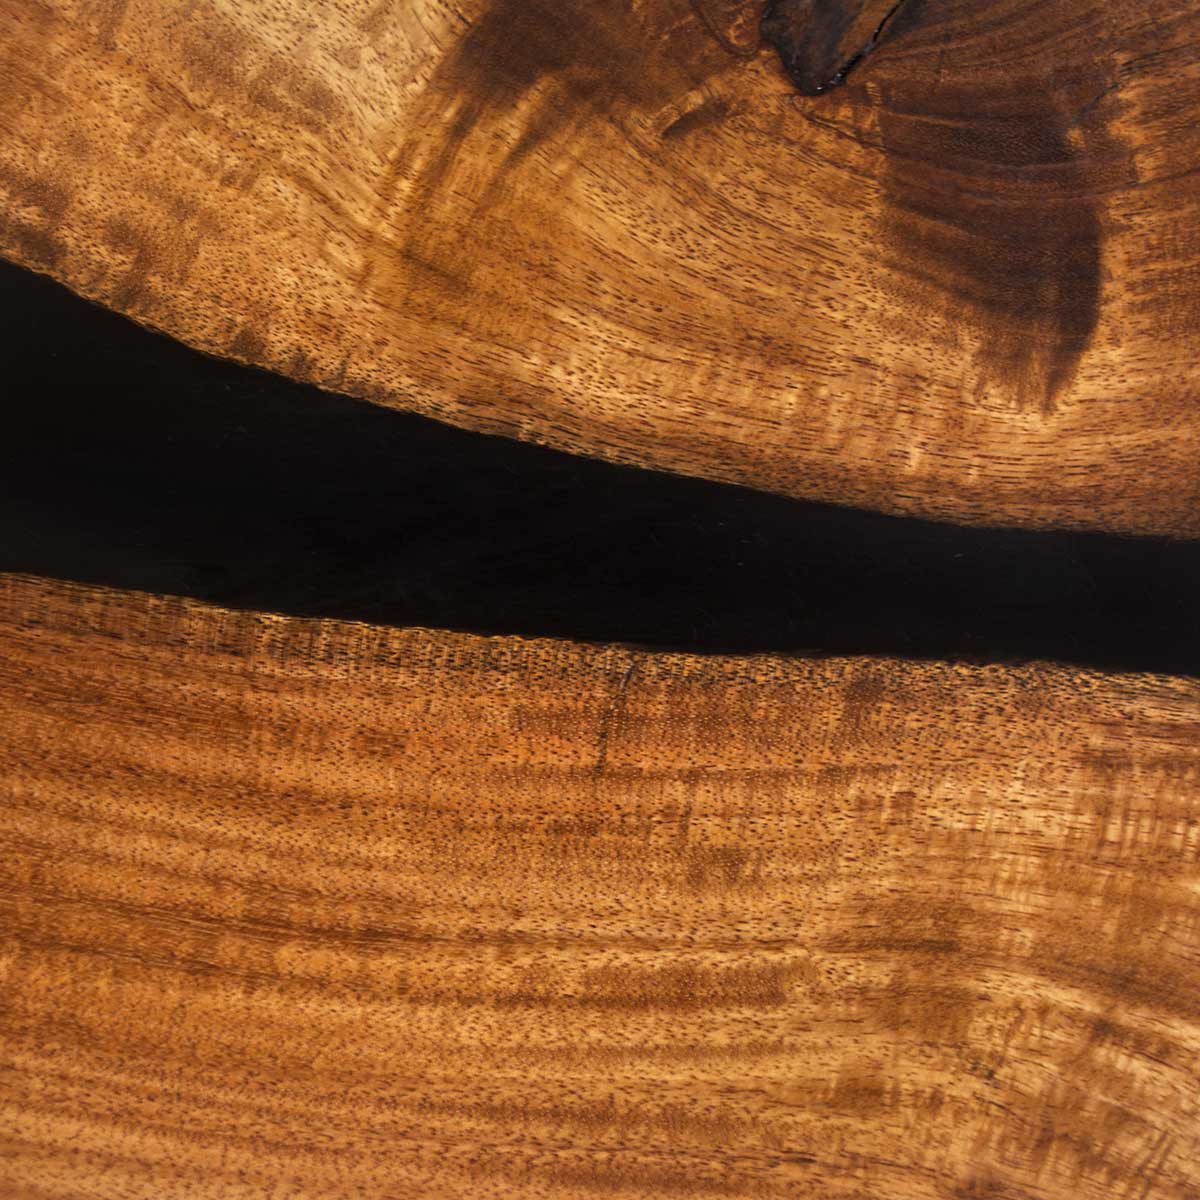 close up acacia wood grain with black epoxy resin